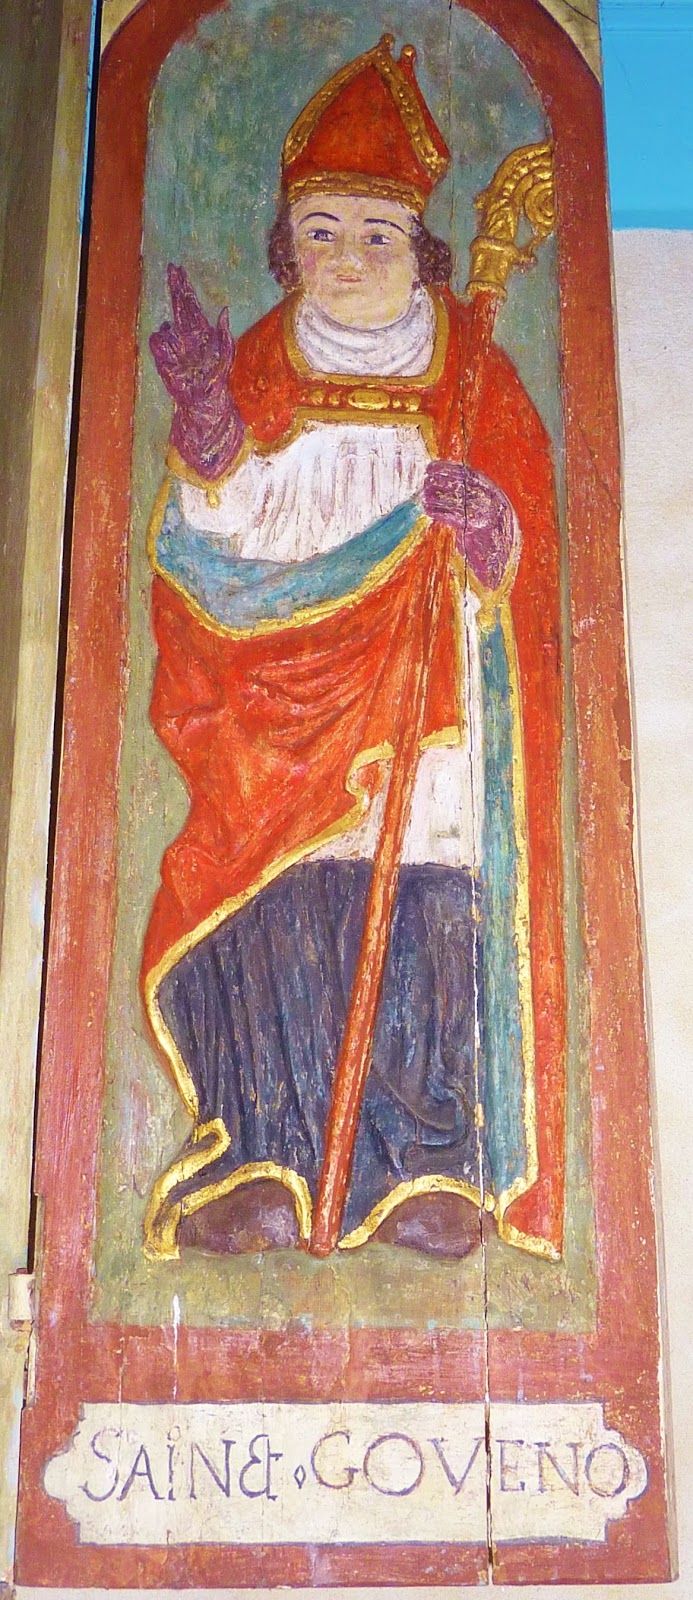 Saint Gouesnou or Goeznovii